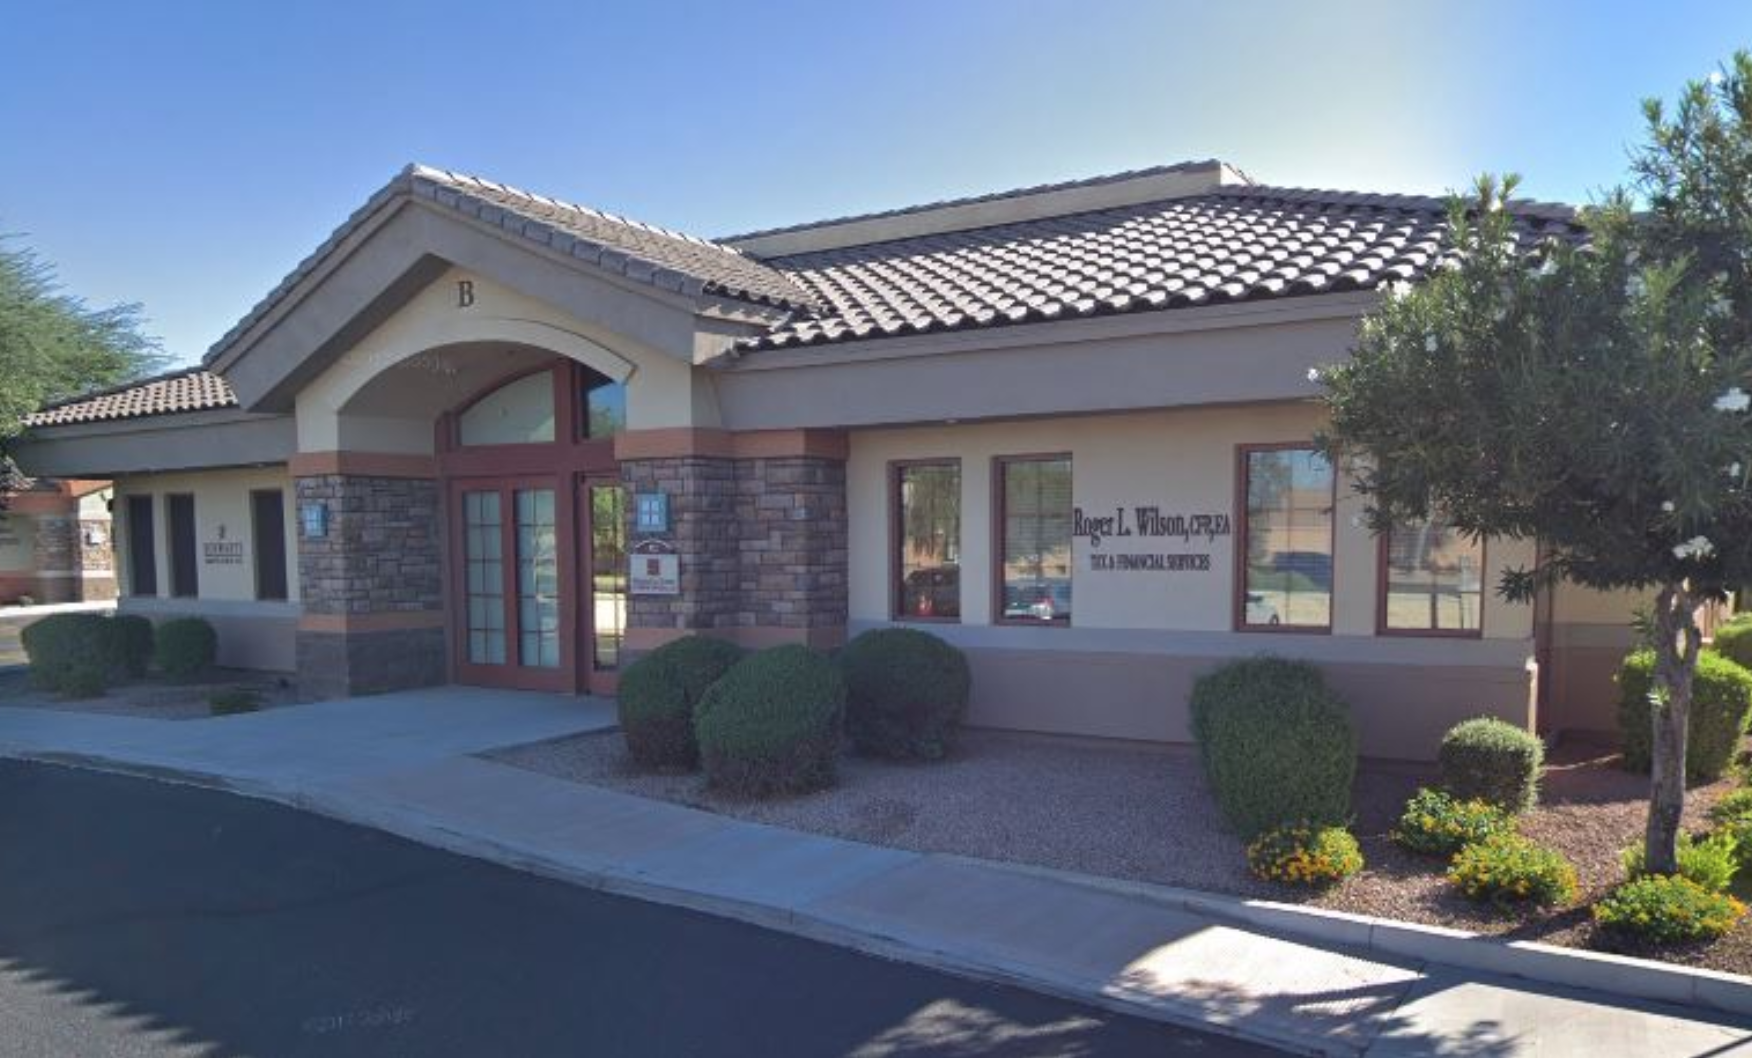 Village Medical - 18275 N. 59th Ave.,  Glendale, AZ, 85308.